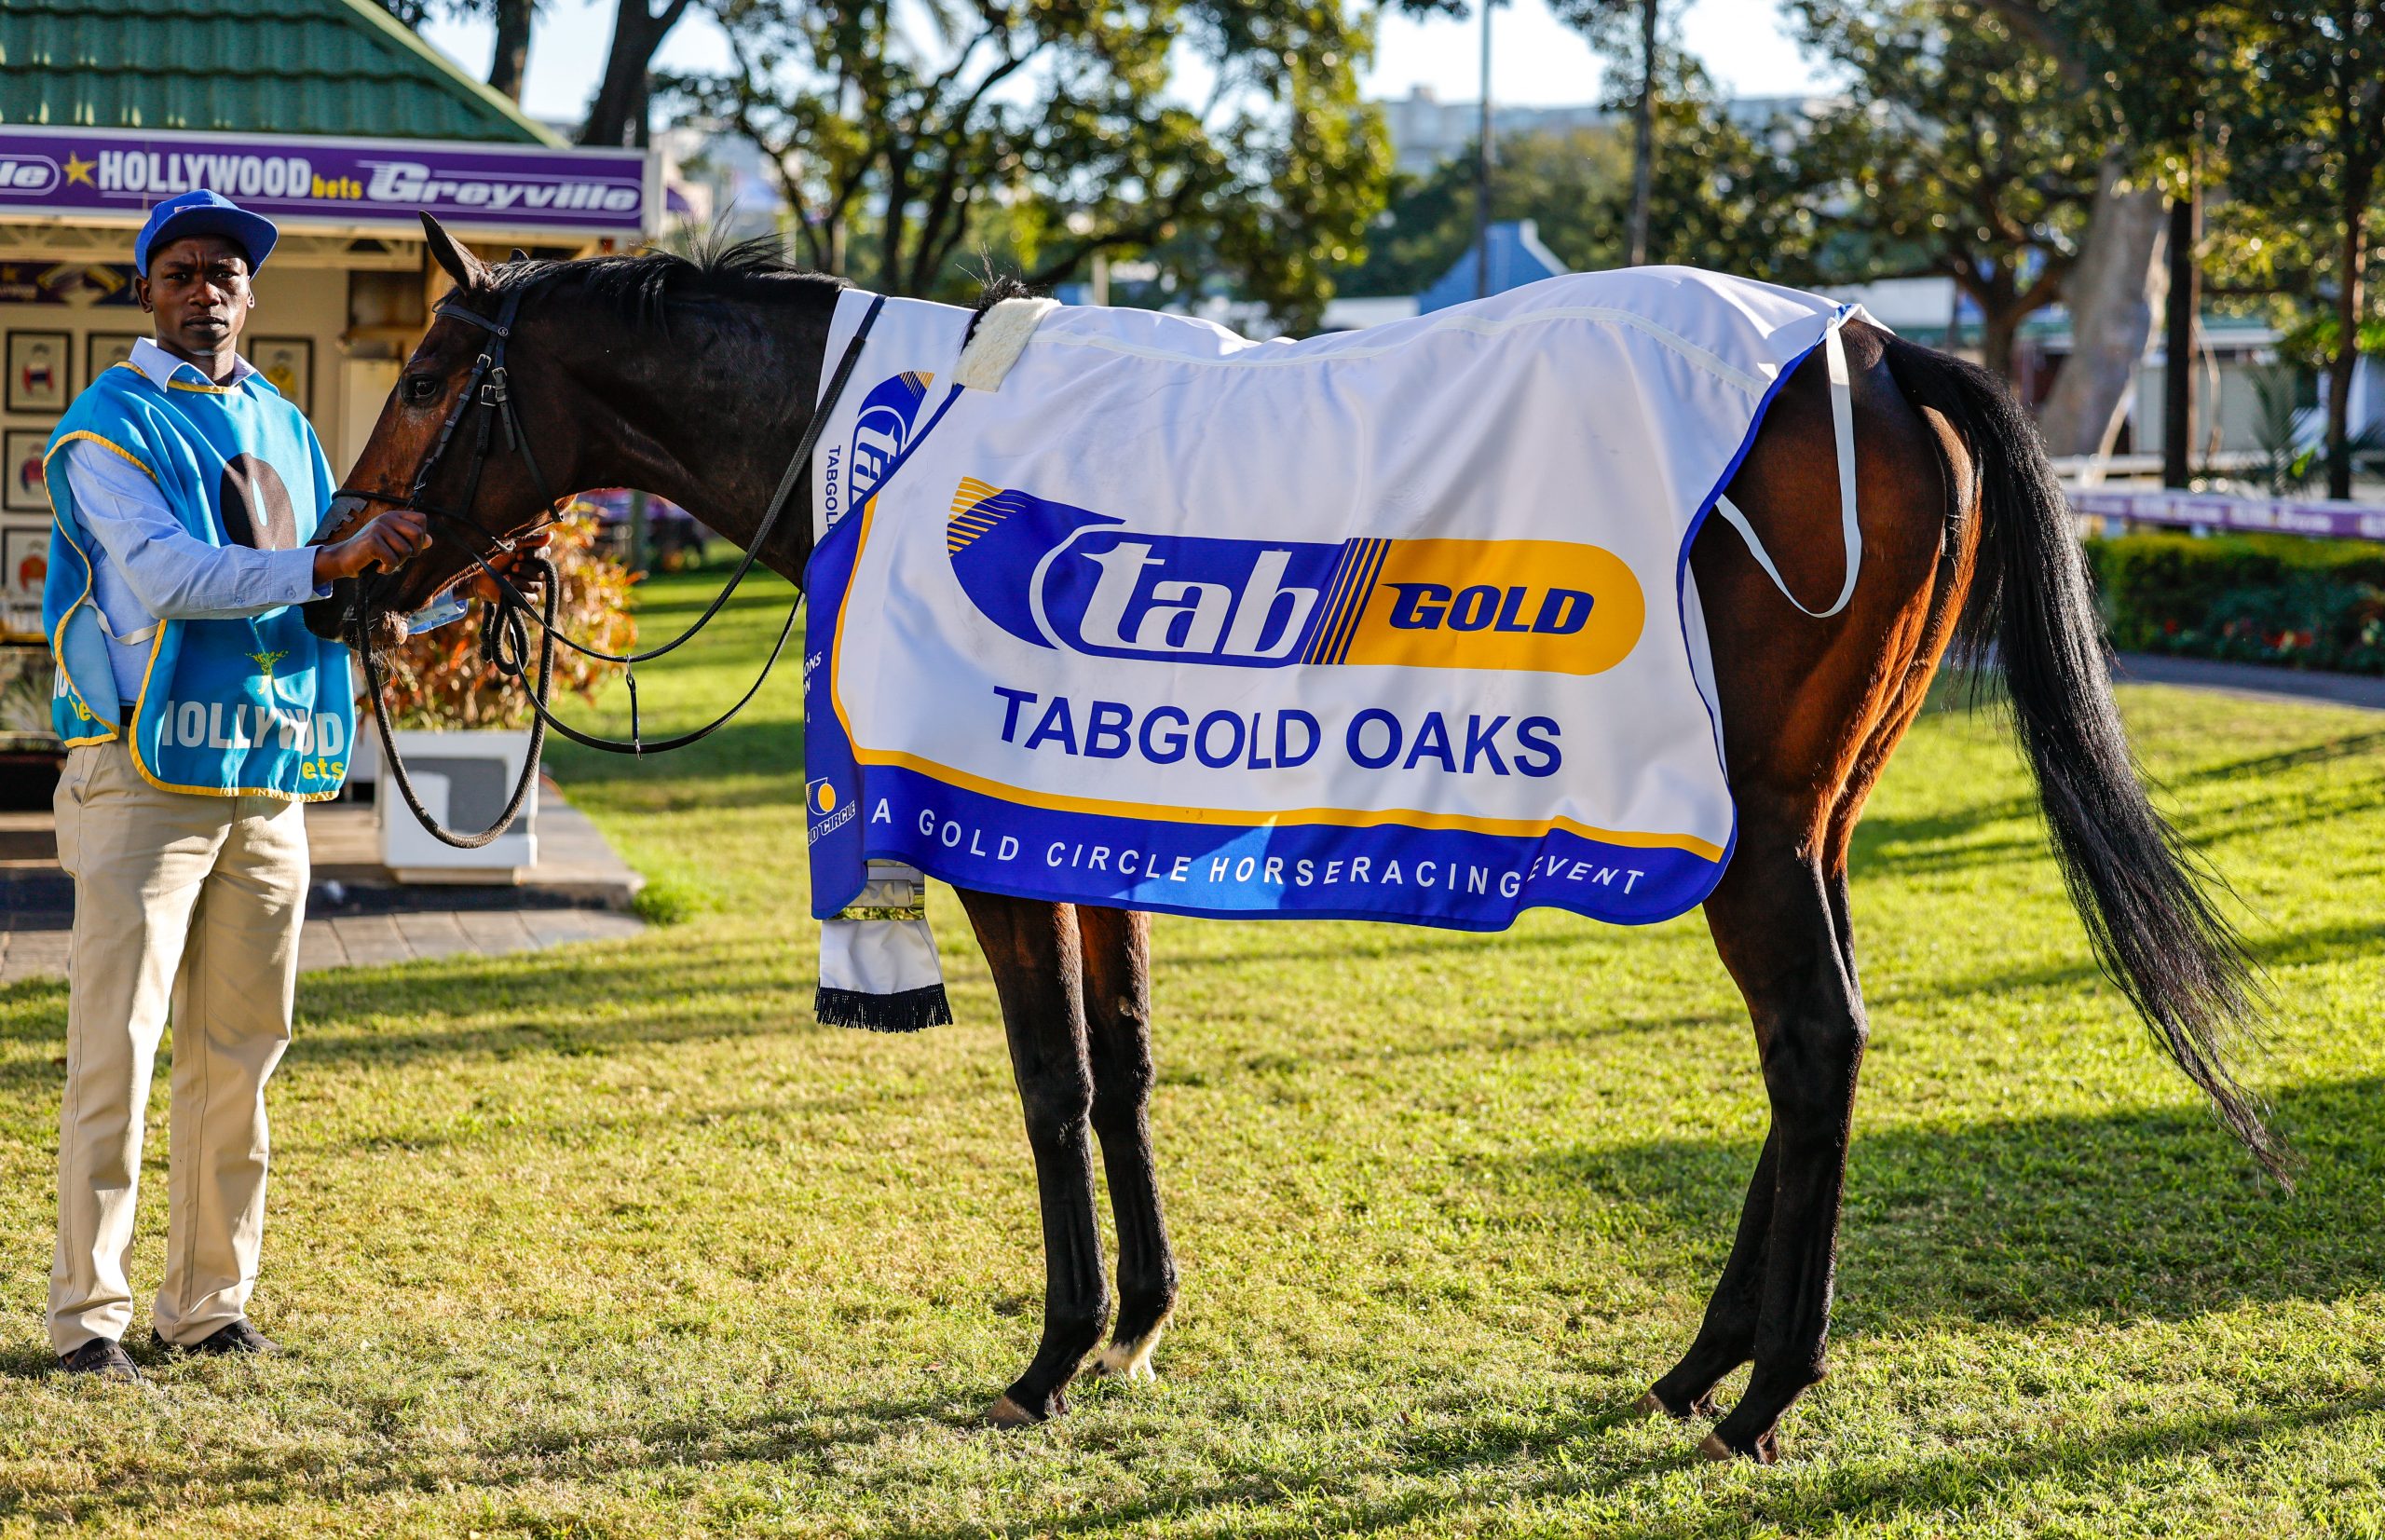 Tabgold Gr2 Oaks winner Red Maple's merit rating has been increased to 108